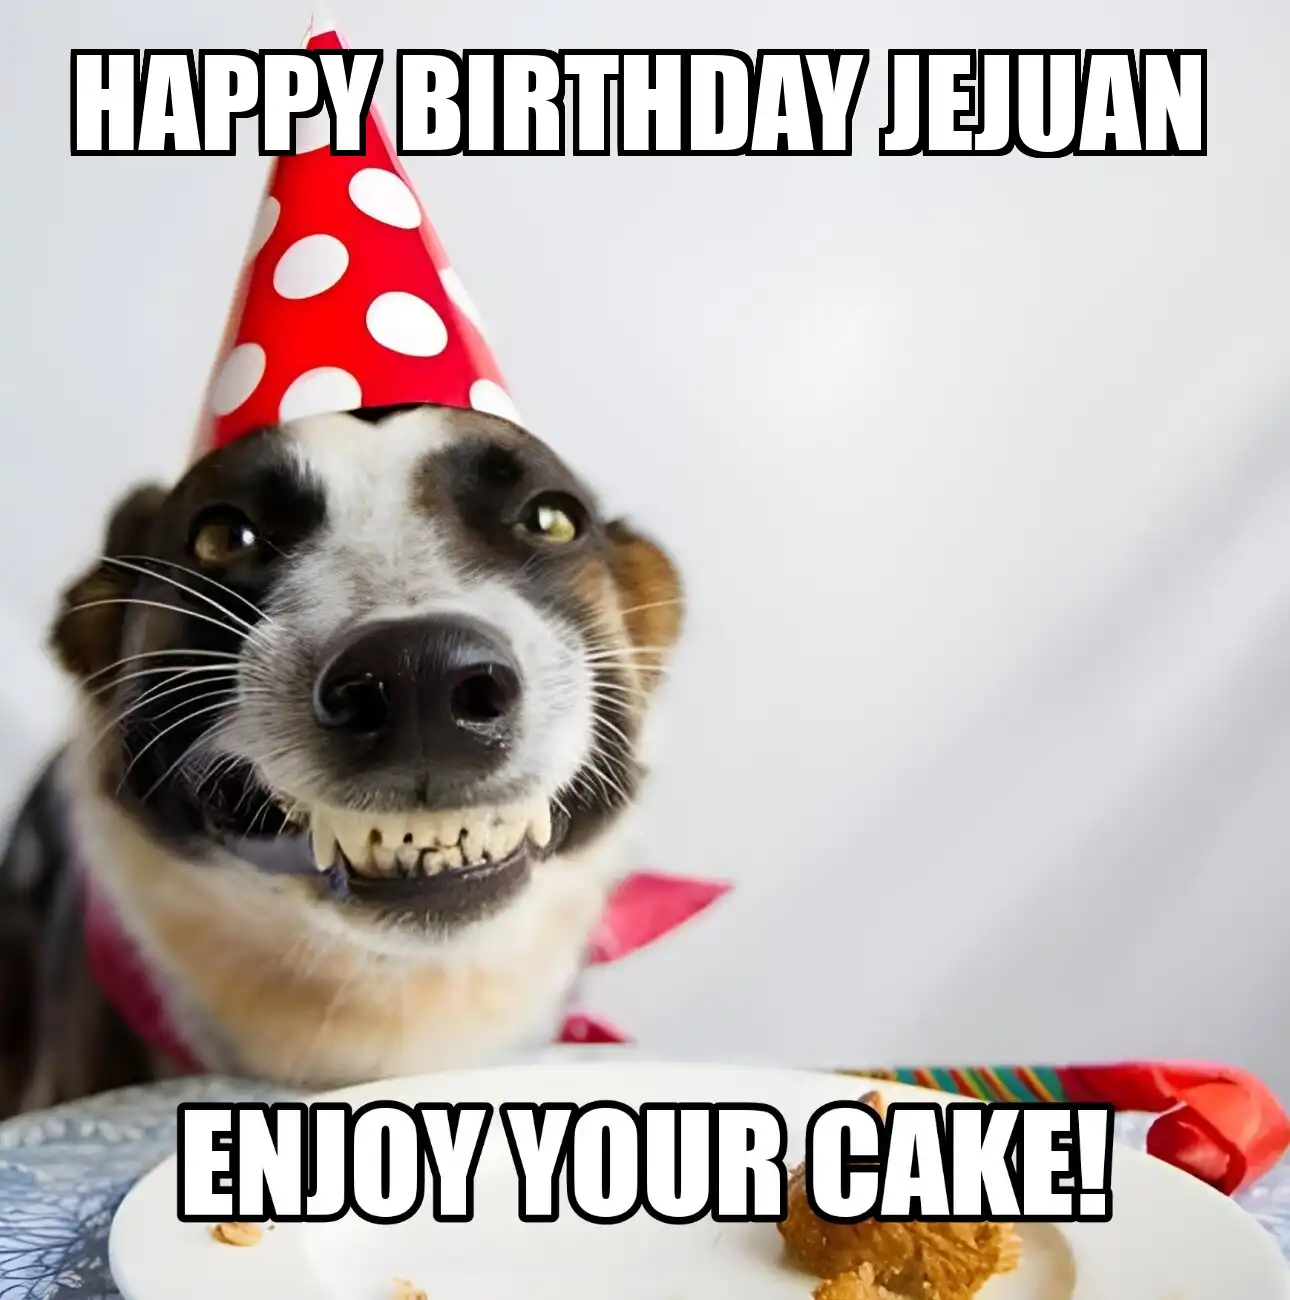 Happy Birthday Jejuan Enjoy Your Cake Dog Meme